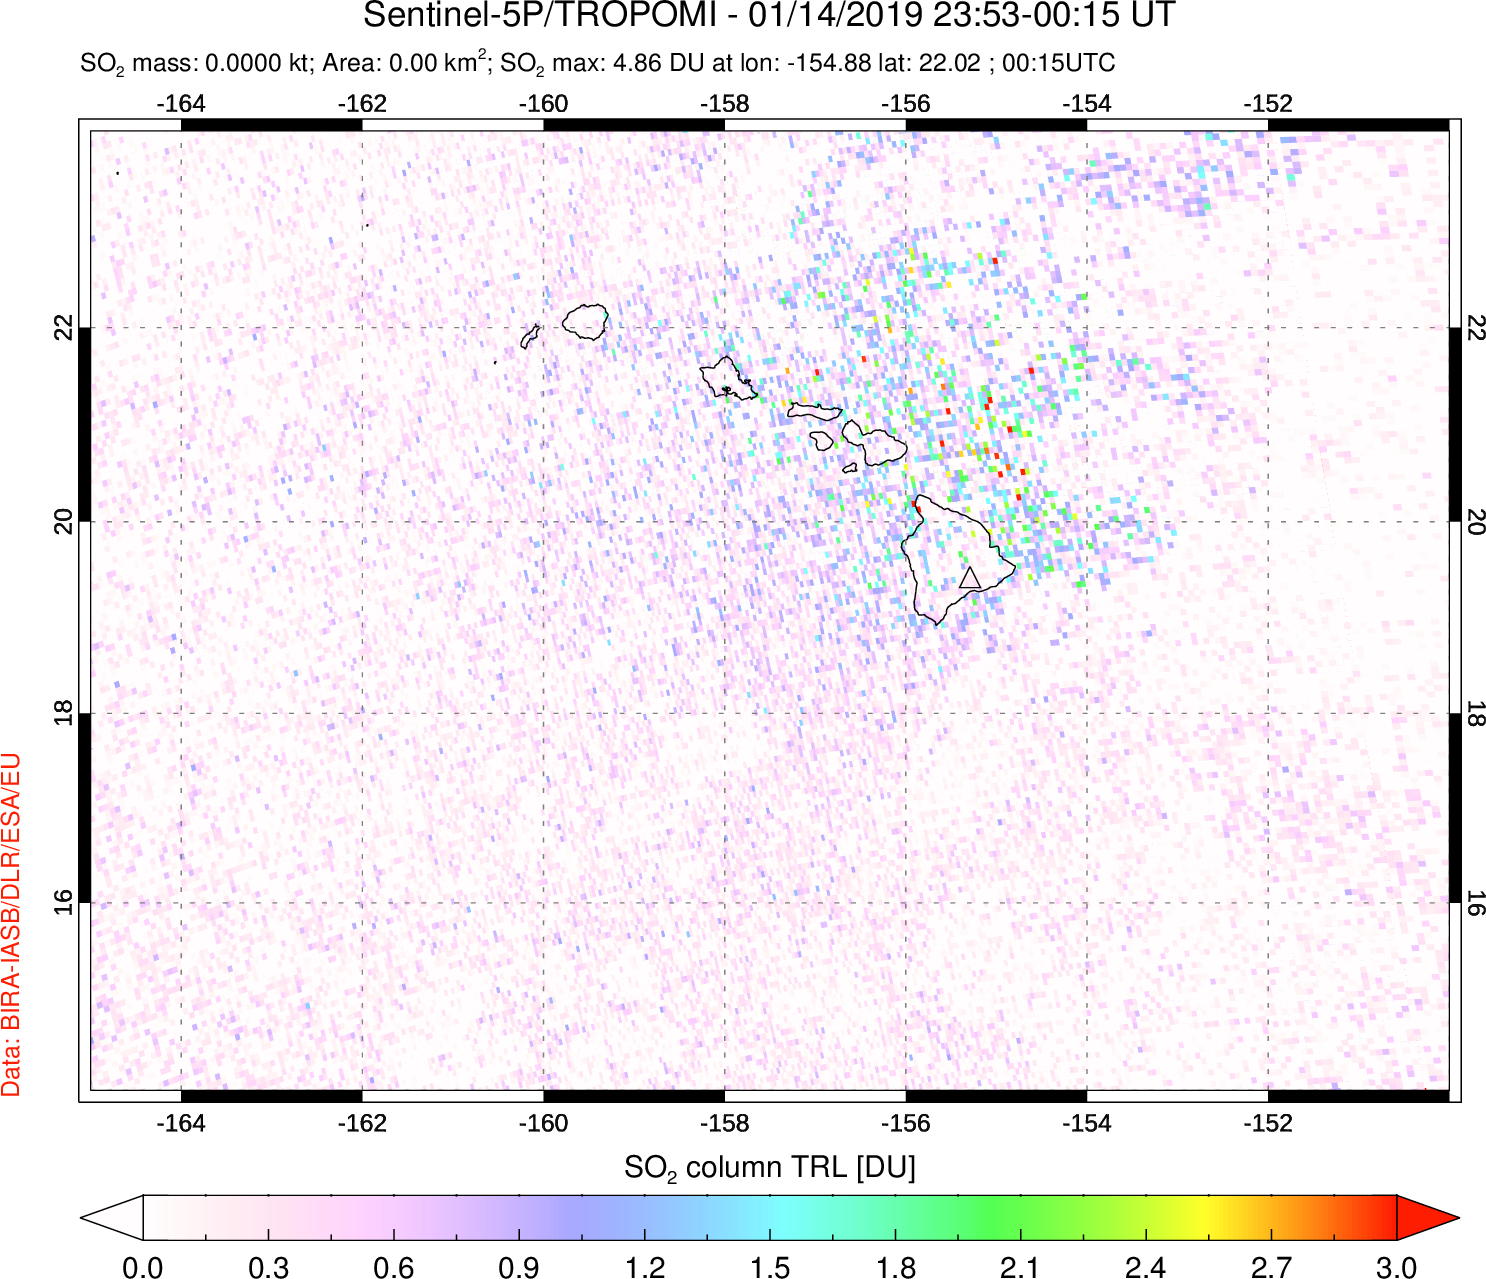 A sulfur dioxide image over Hawaii, USA on Jan 14, 2019.